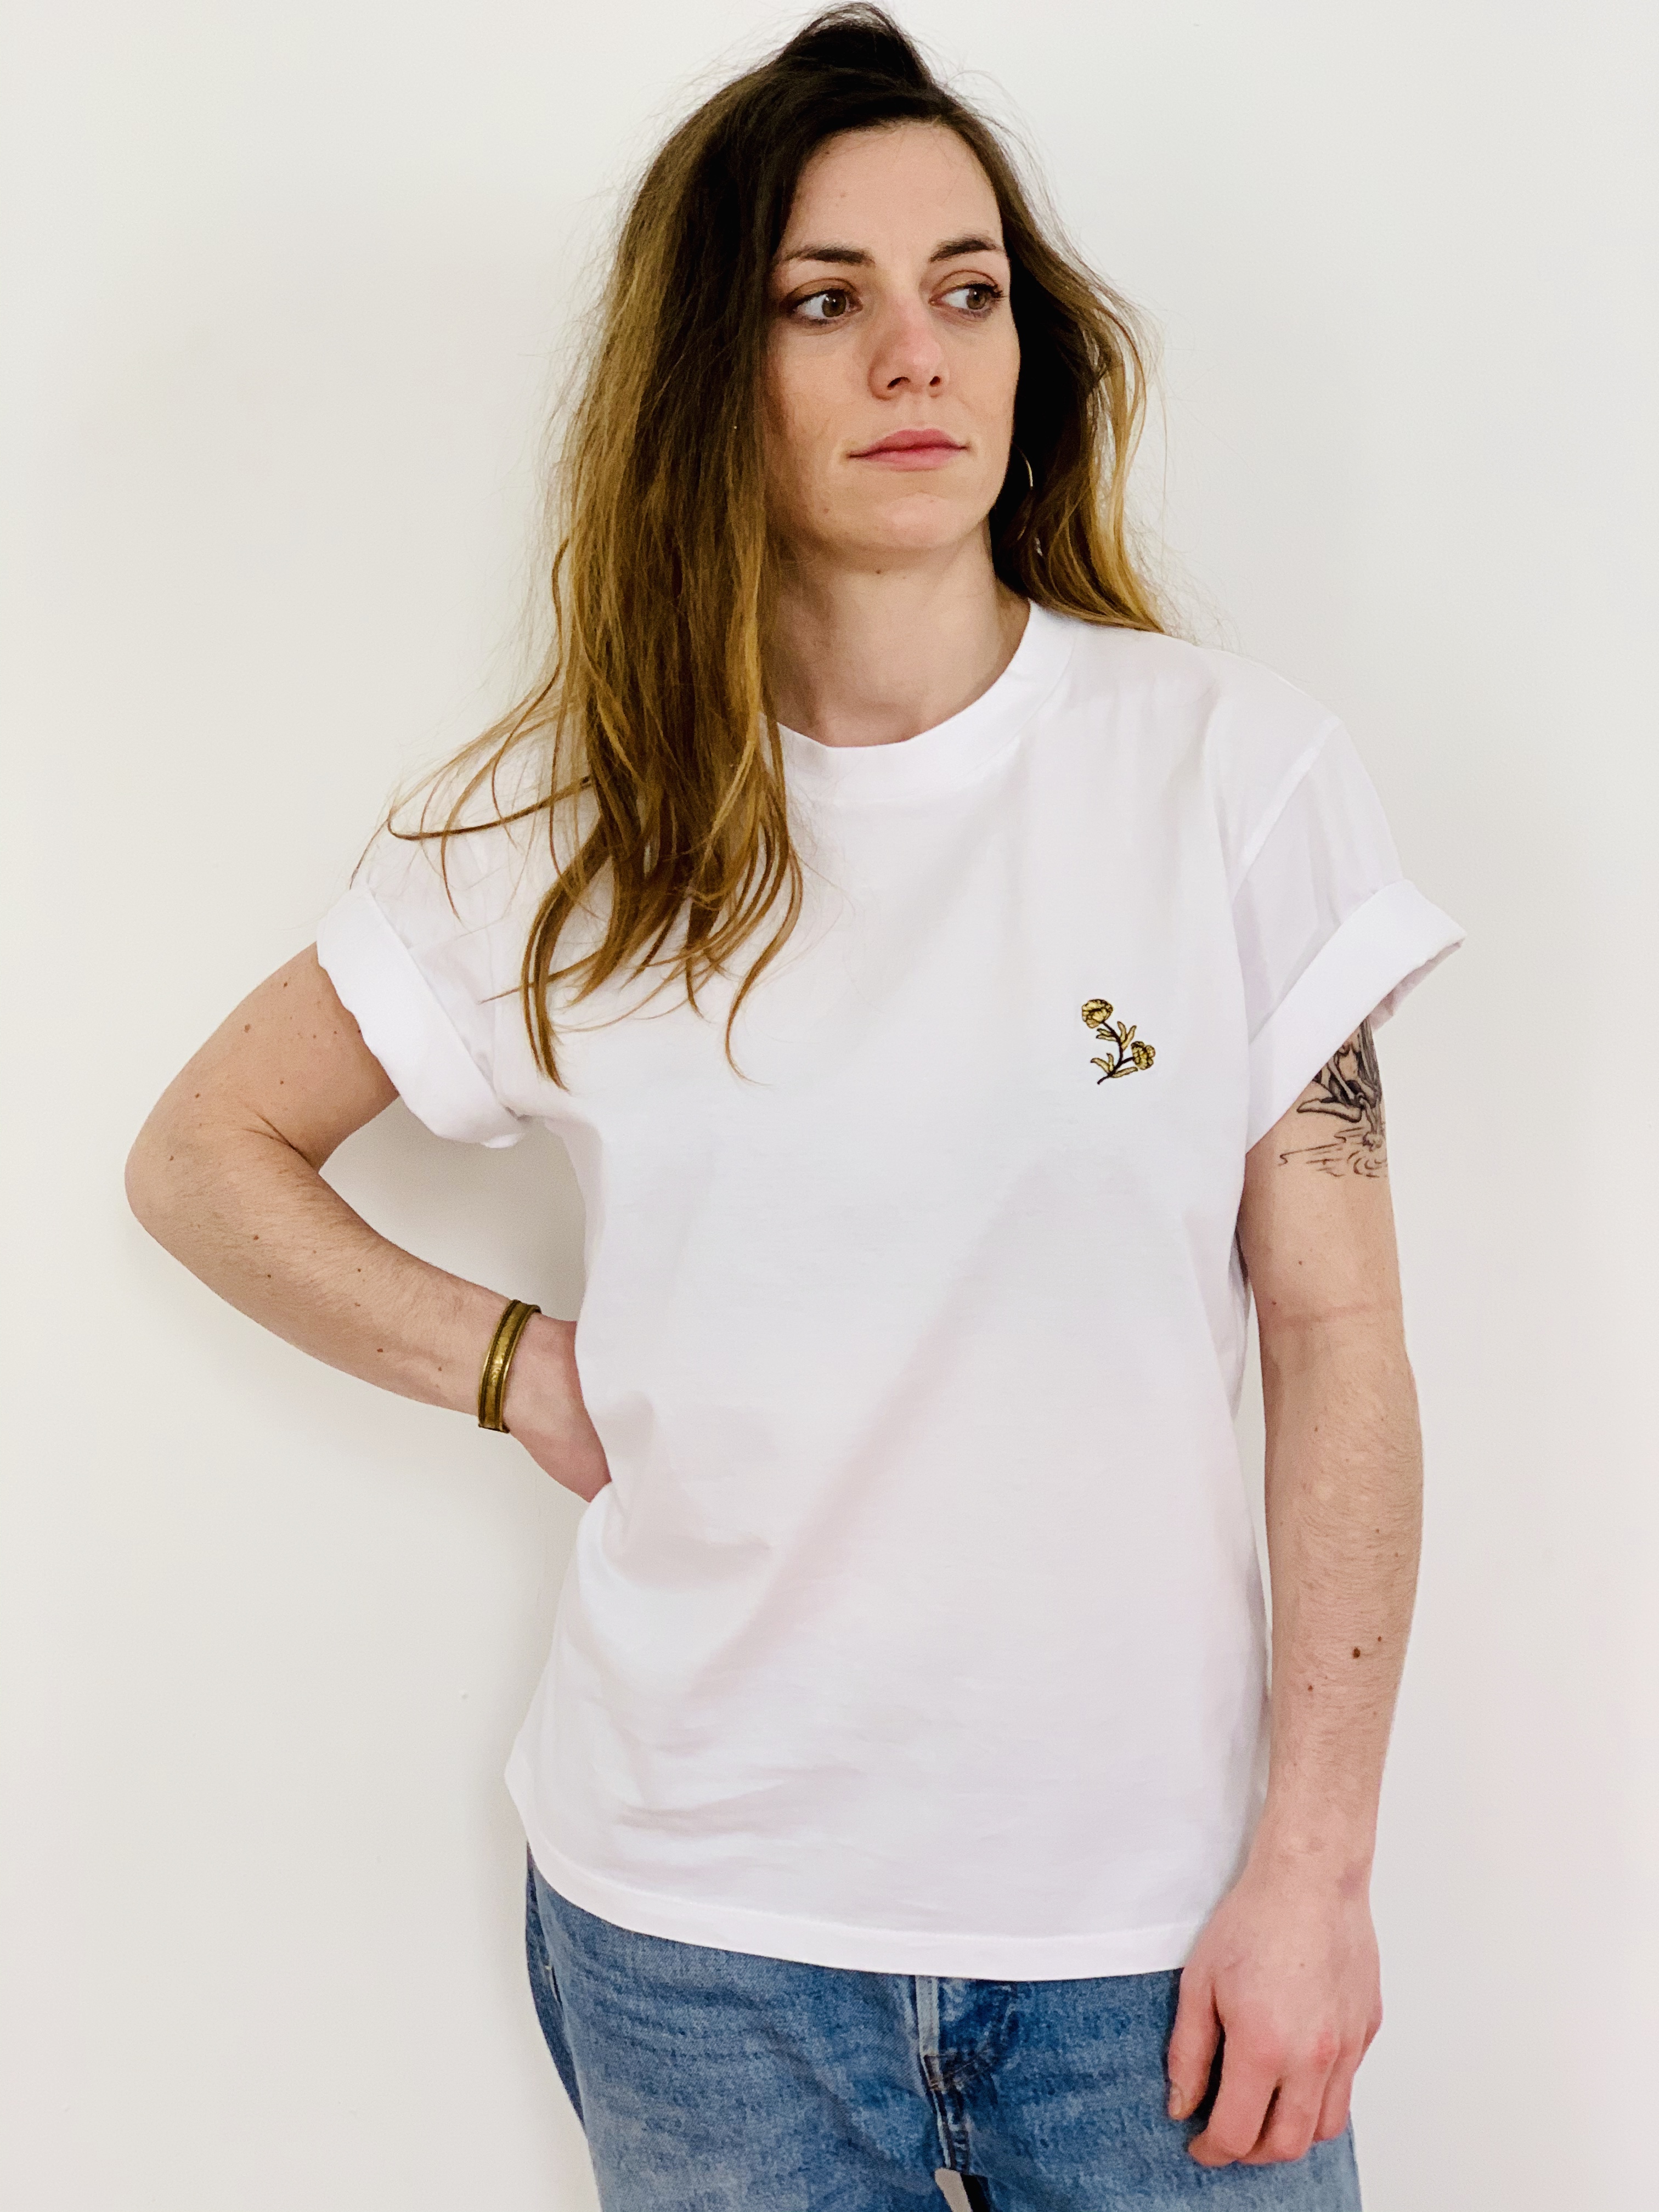 Célia Lobo - T-Shirt FLOR White - 100% Organic Cotton